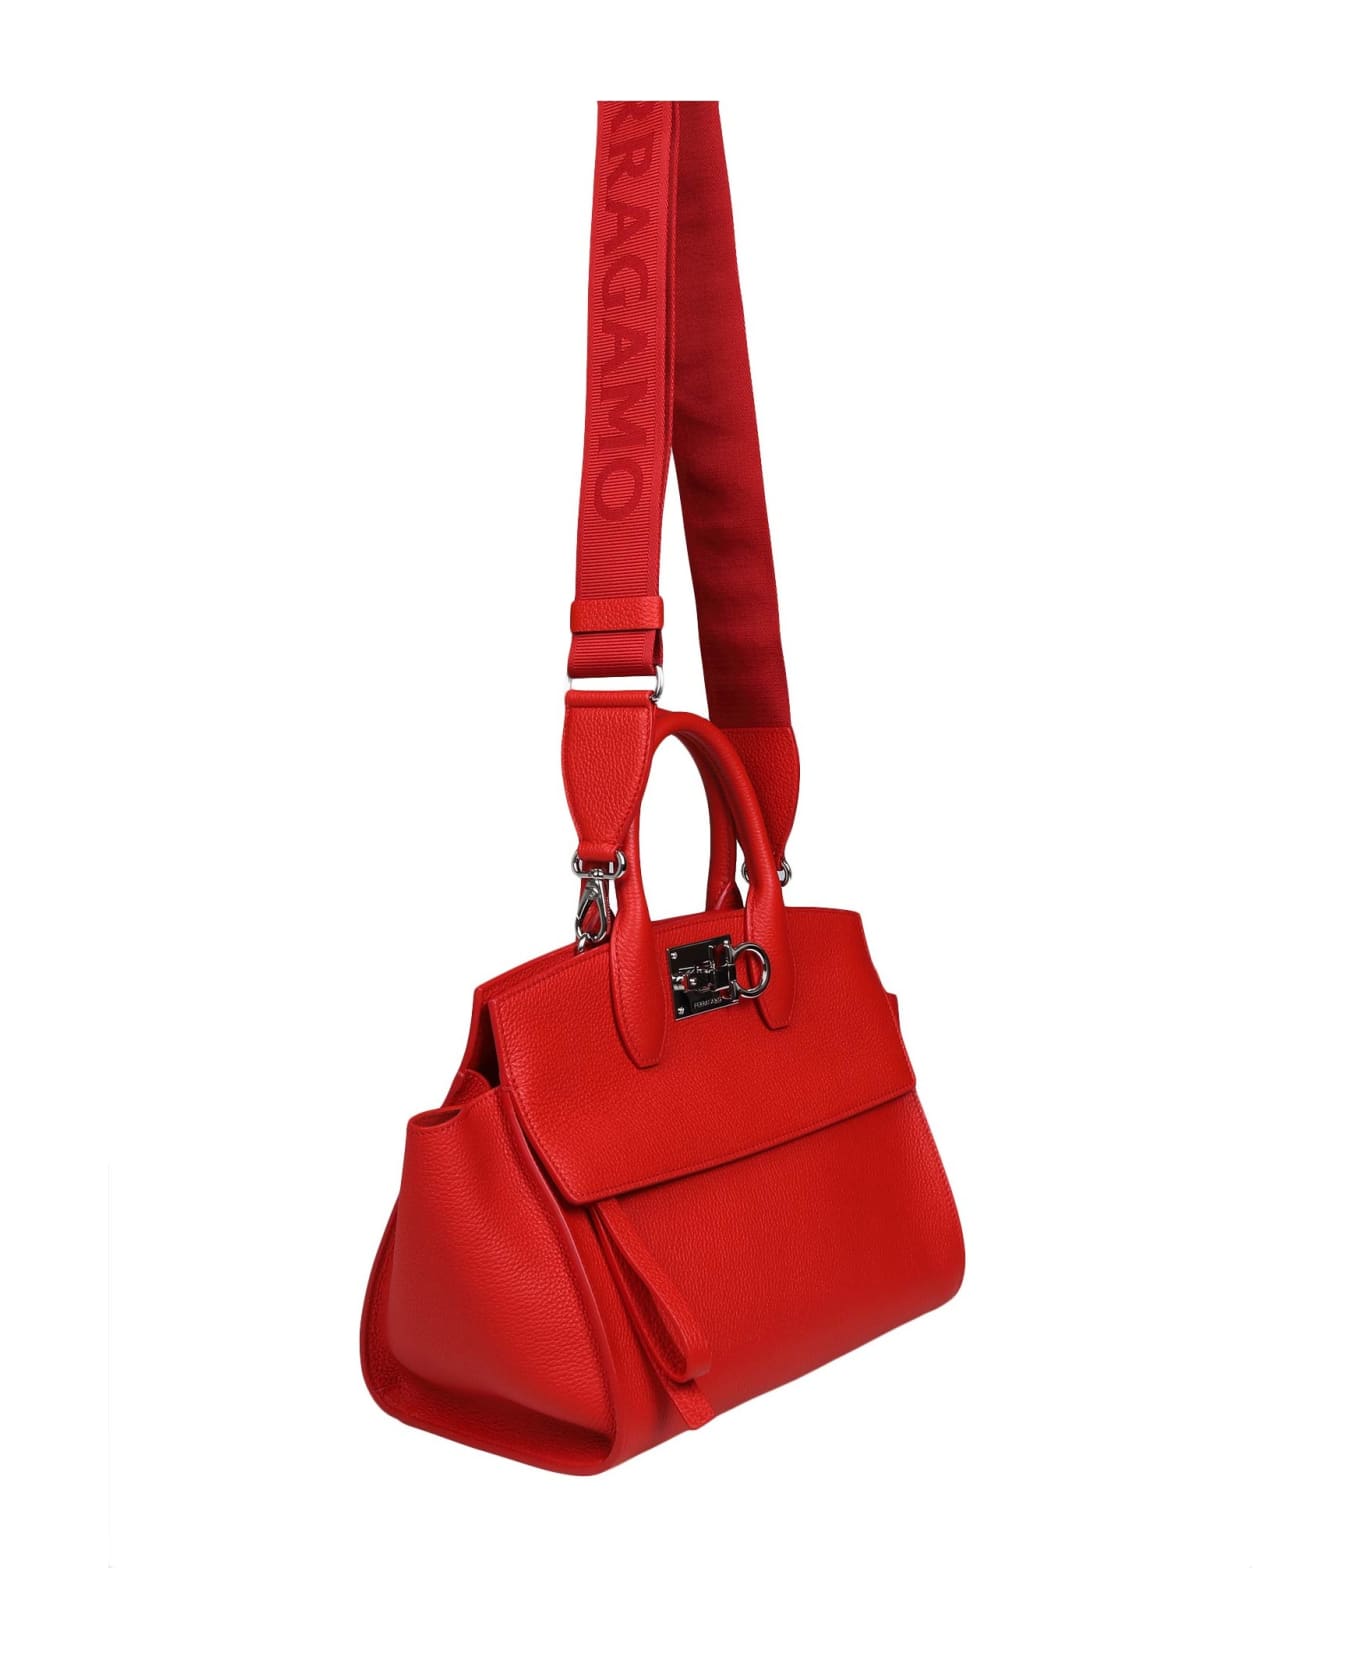 Ferragamo Studio Sof Leather Handbag - Flame Red 